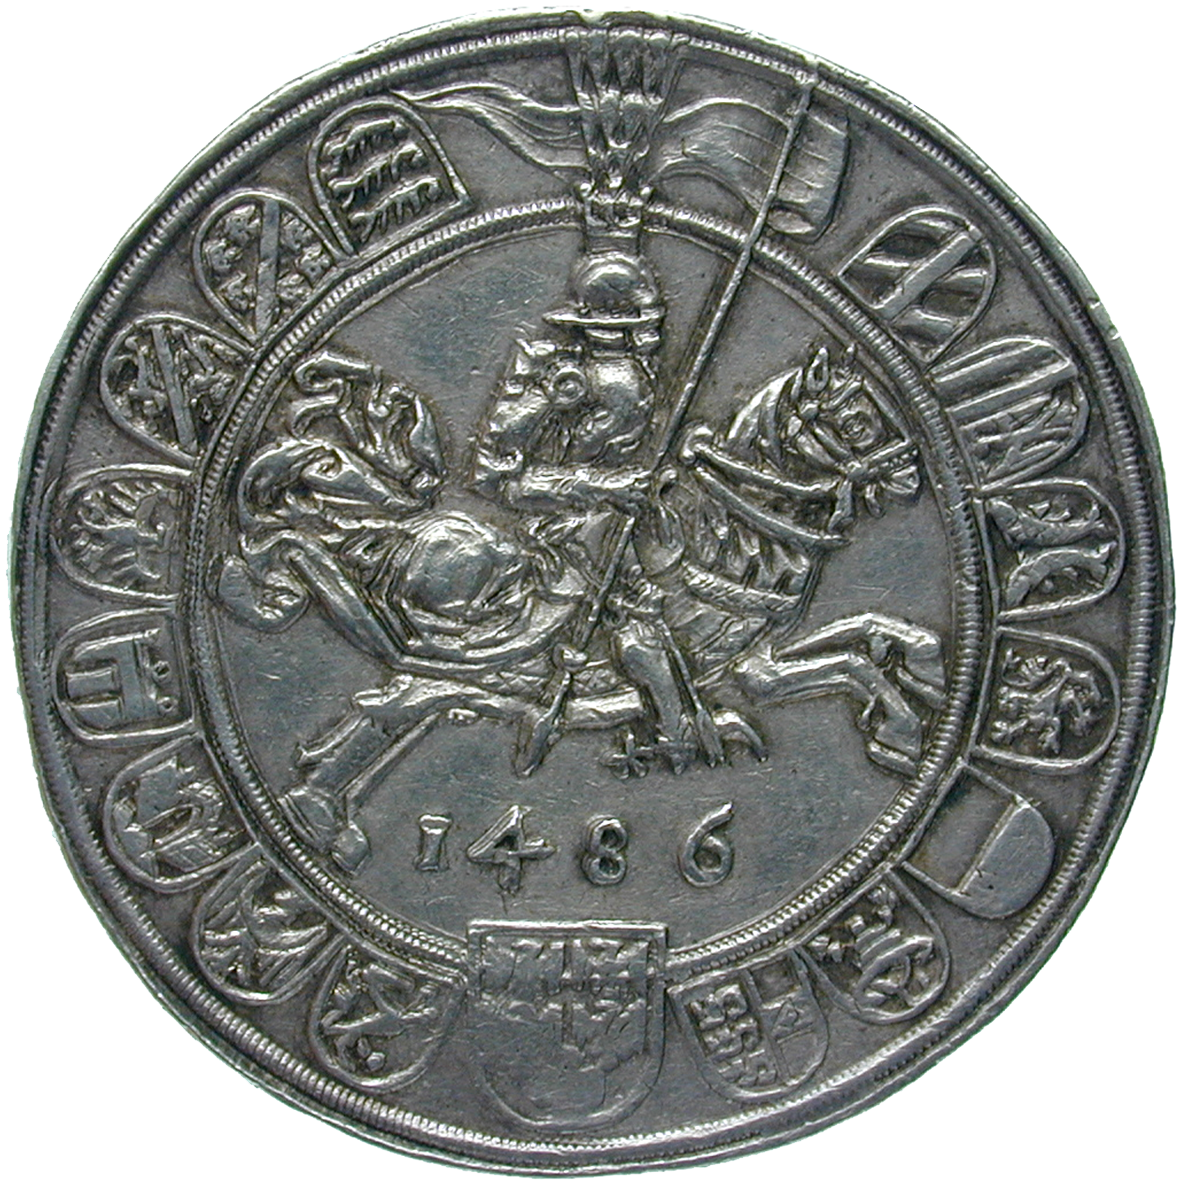 Holy Roman Empire, Archduchy of Austria, County of Tyrol, Sigismund, Guldiner 1486 (reverse)